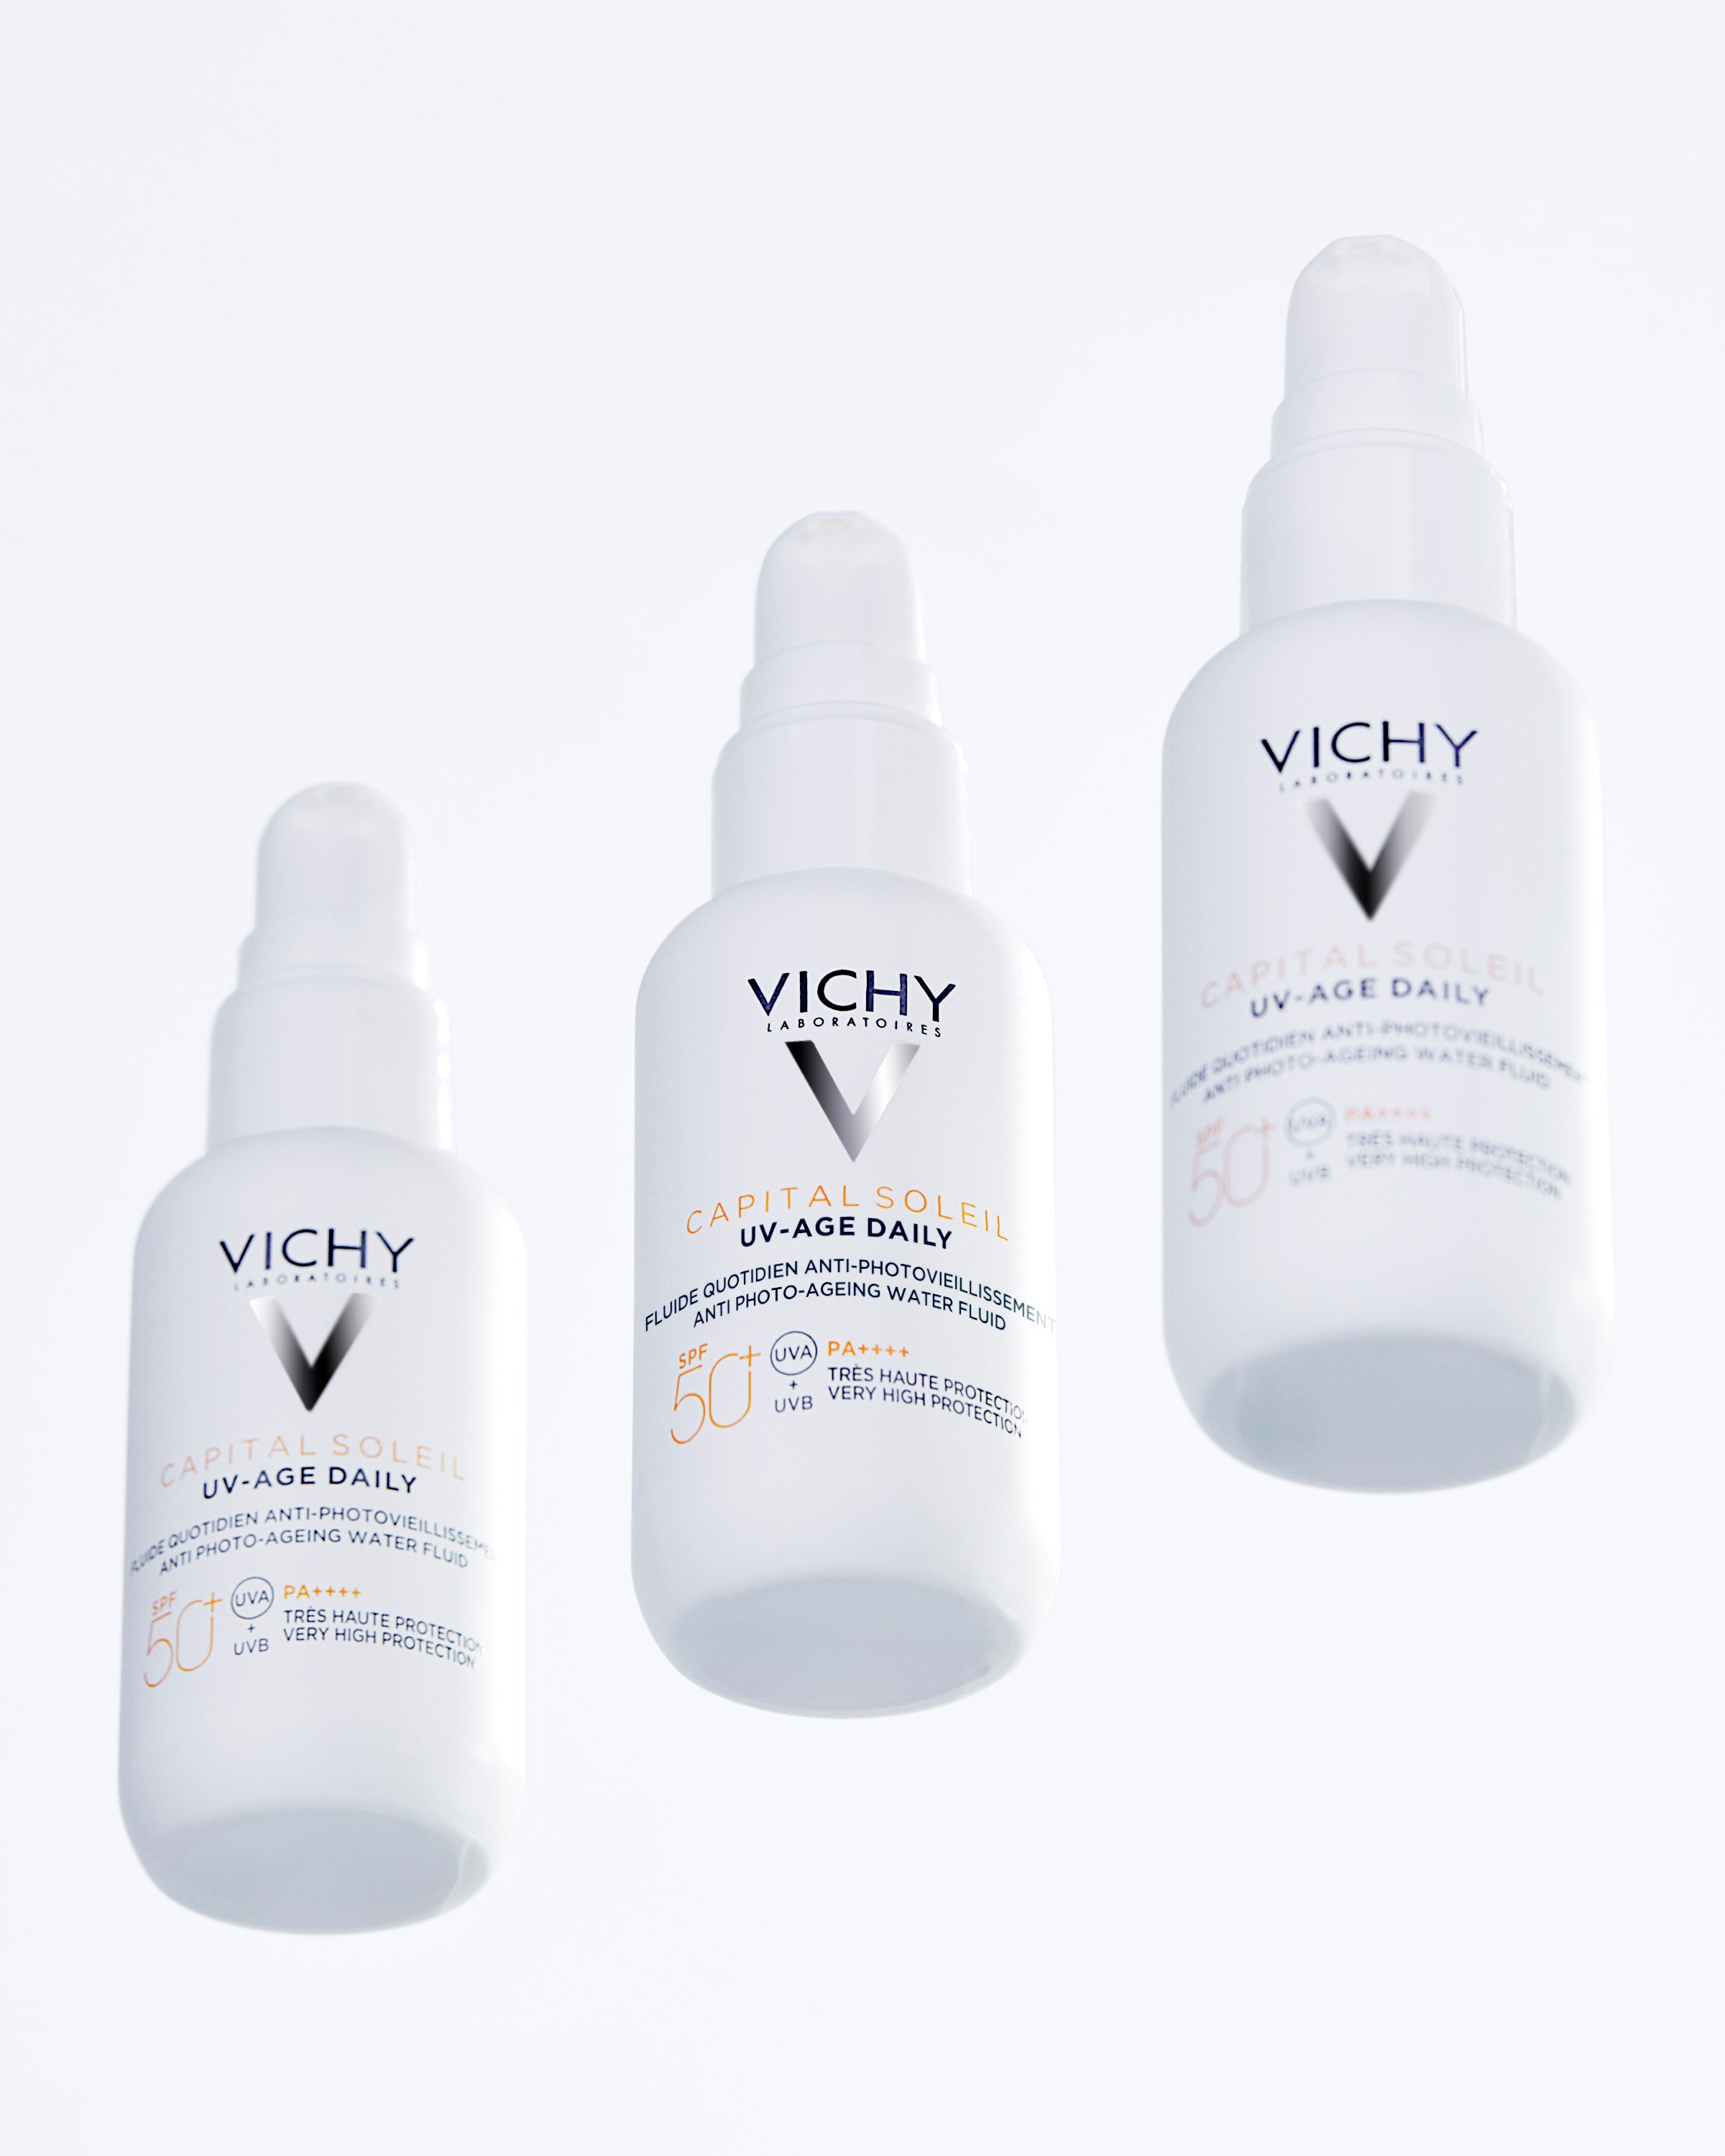 Солнцезащитный невесомый флюид Vichy Capital Soleil UV-Age Daily против признаков фотостарения кожи лица, SPF 50+, 40 мл (MB364200) - фото 3